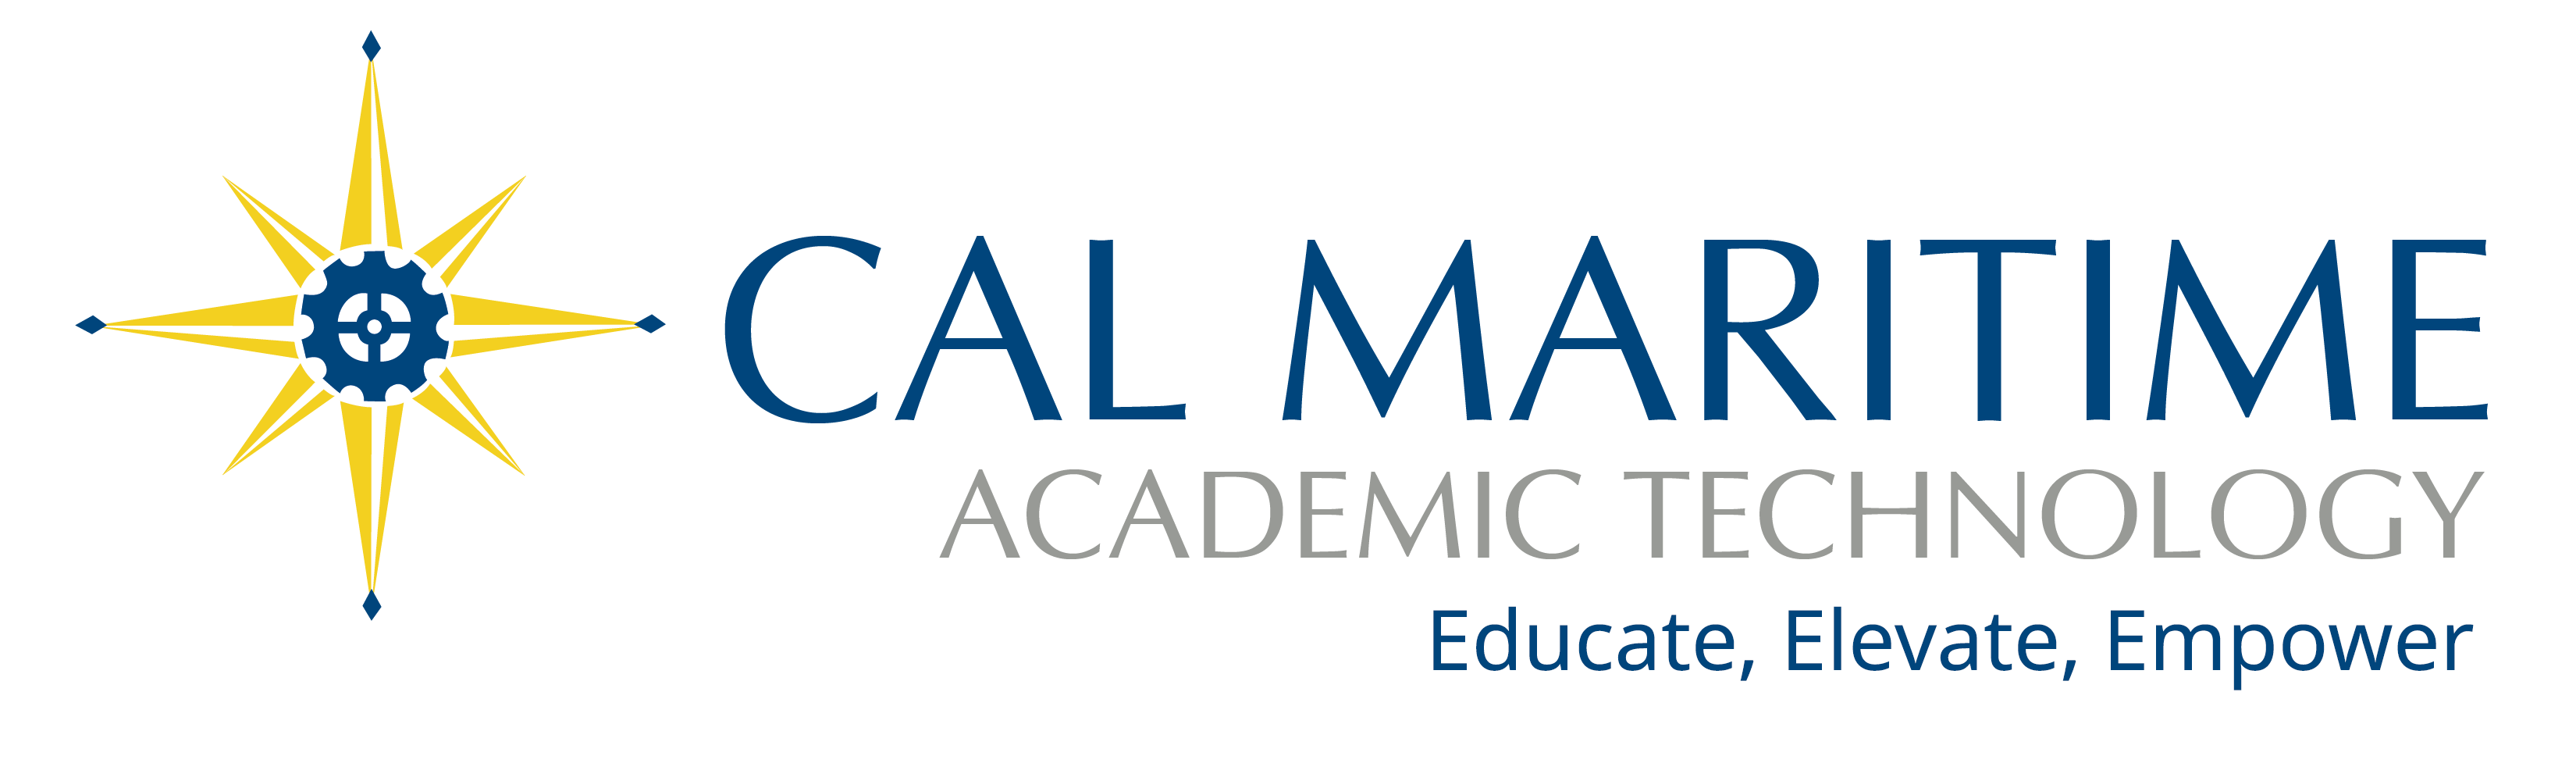 Academic Technology logo